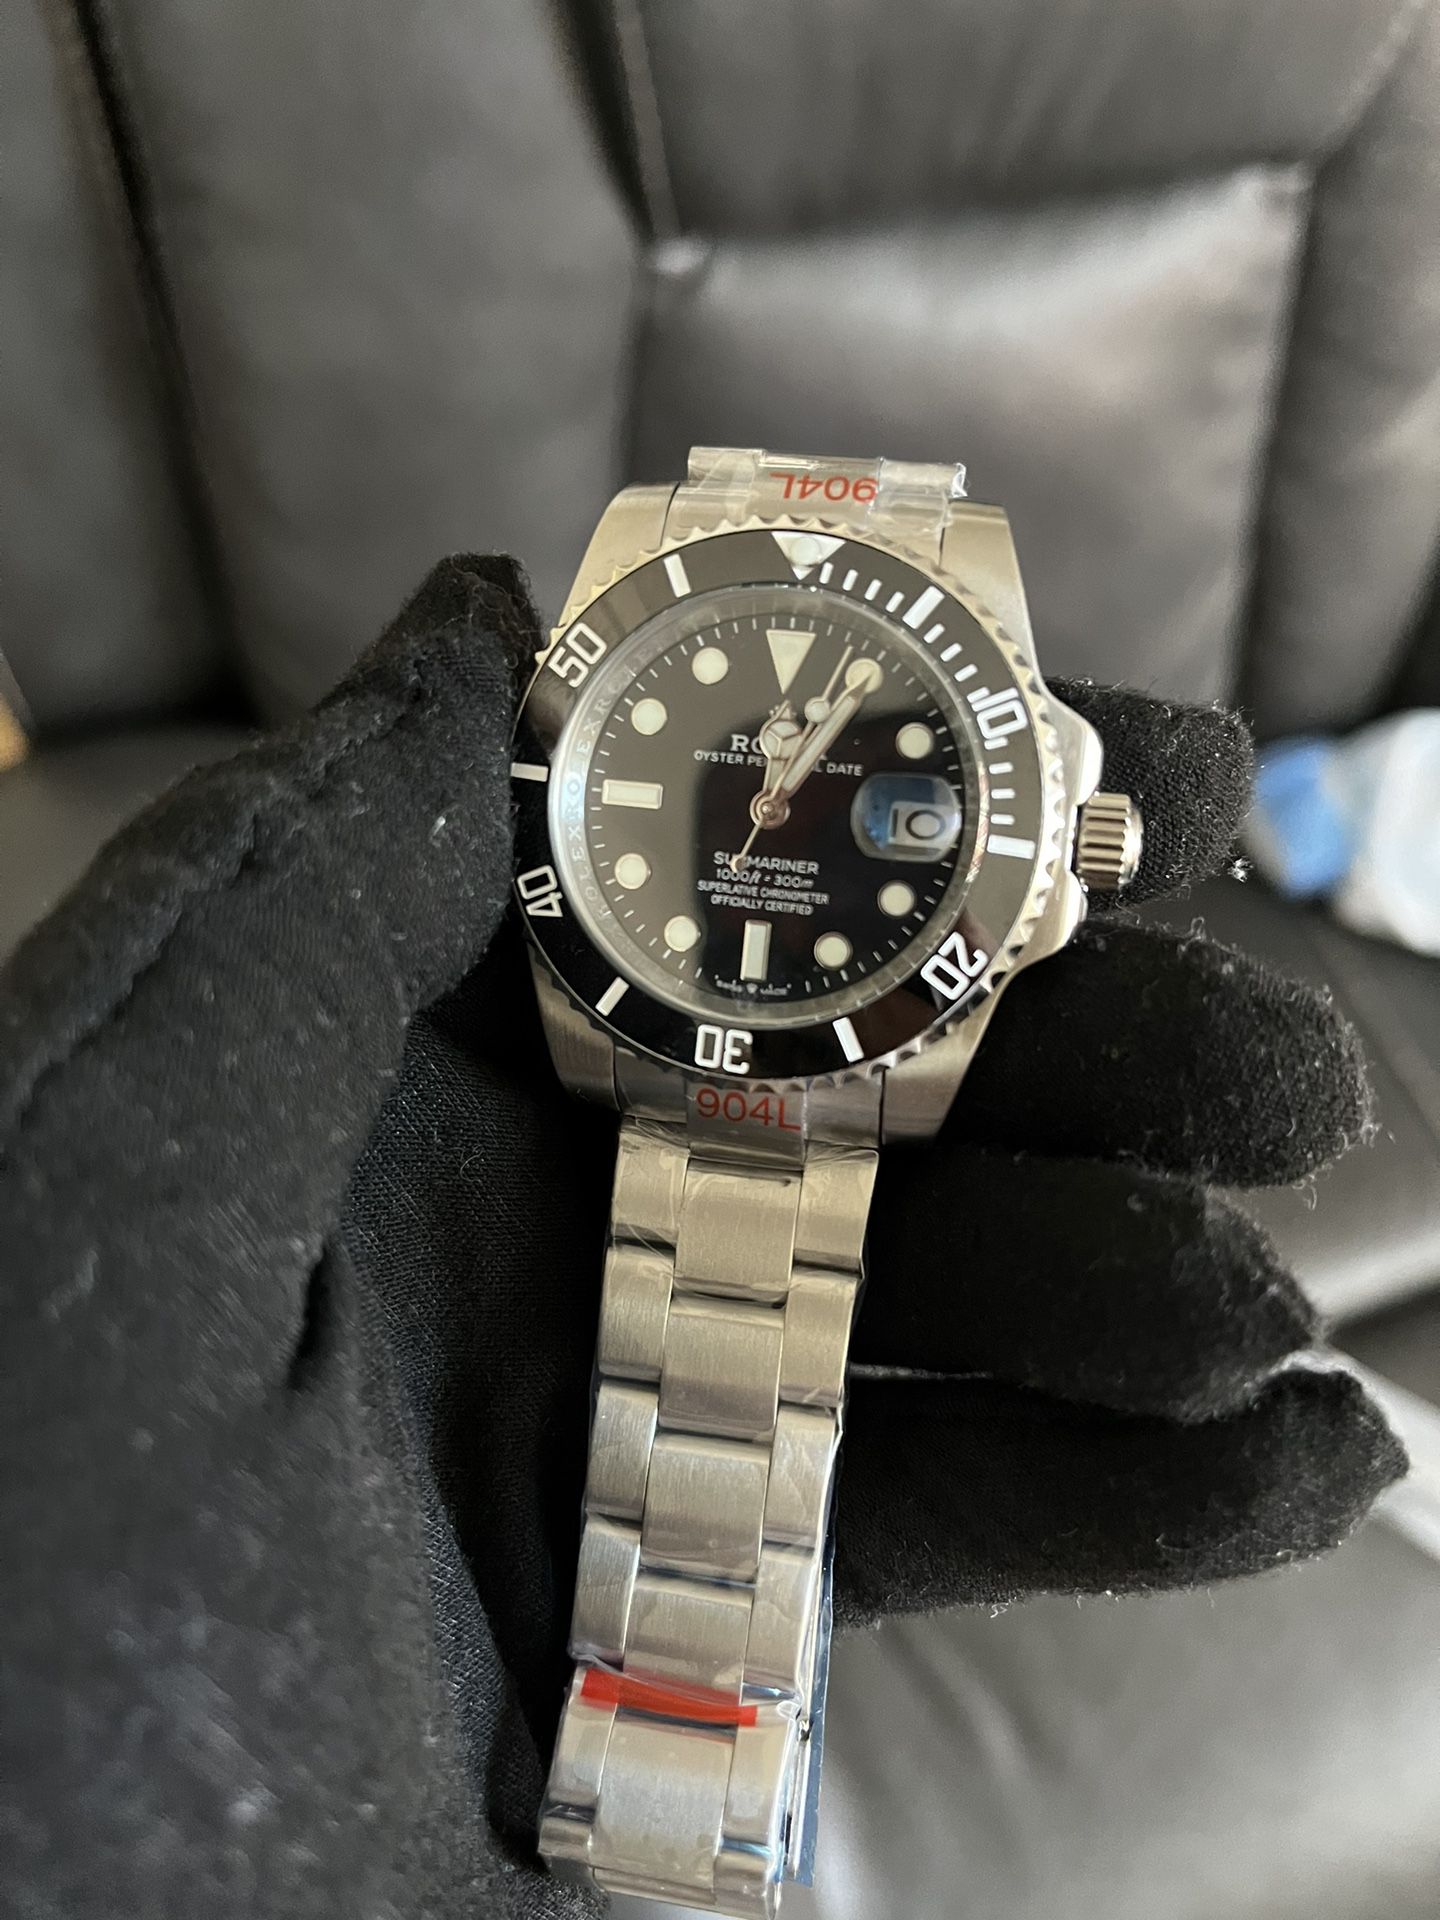 Submariner Automatic Wrist Watch